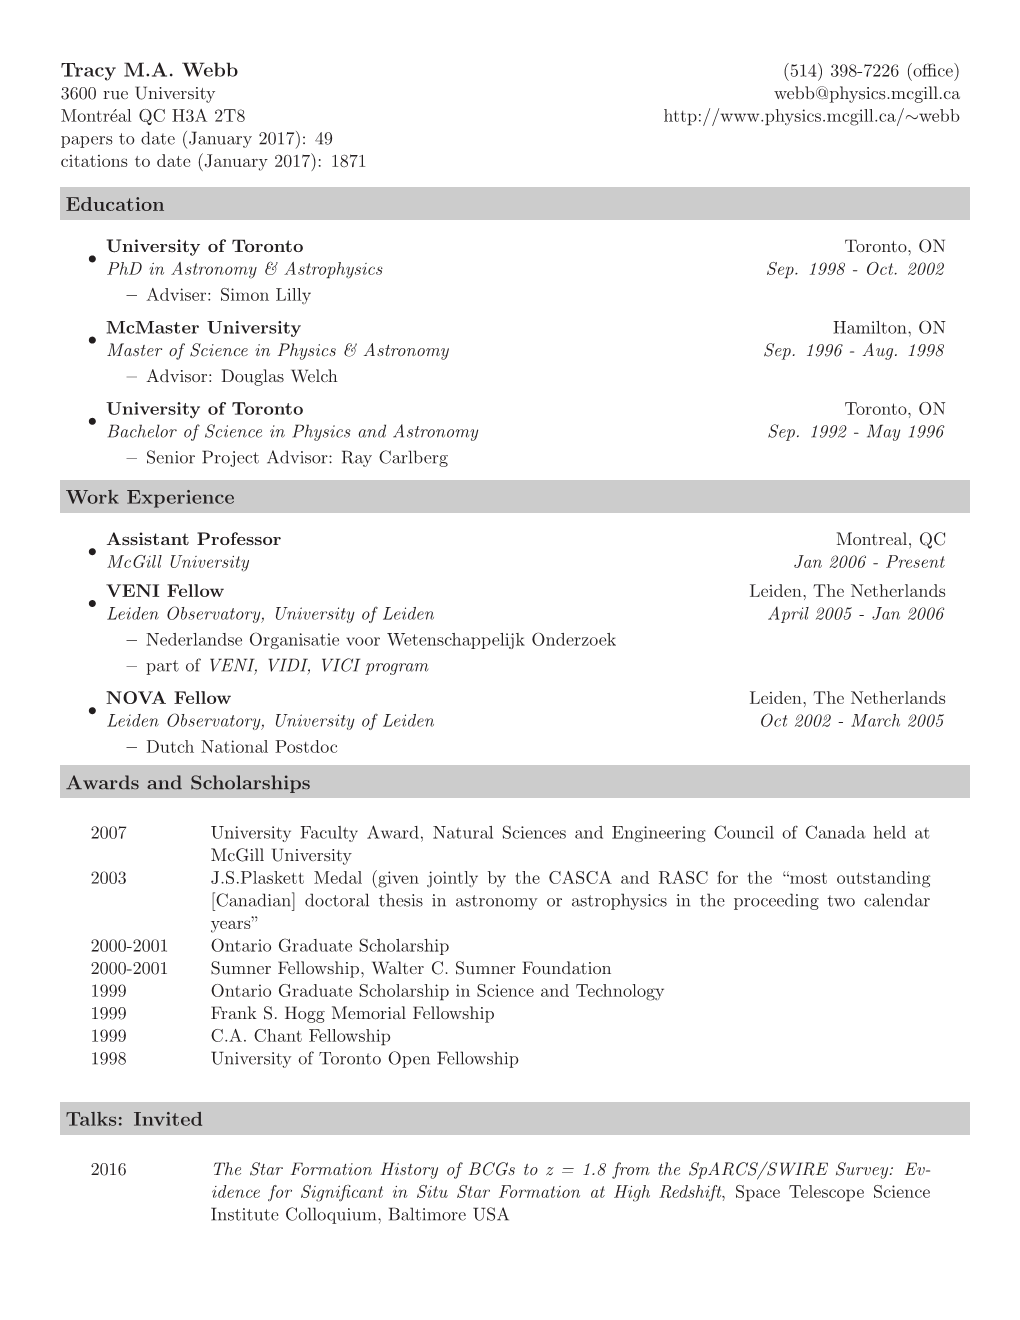 PDF Version of CV